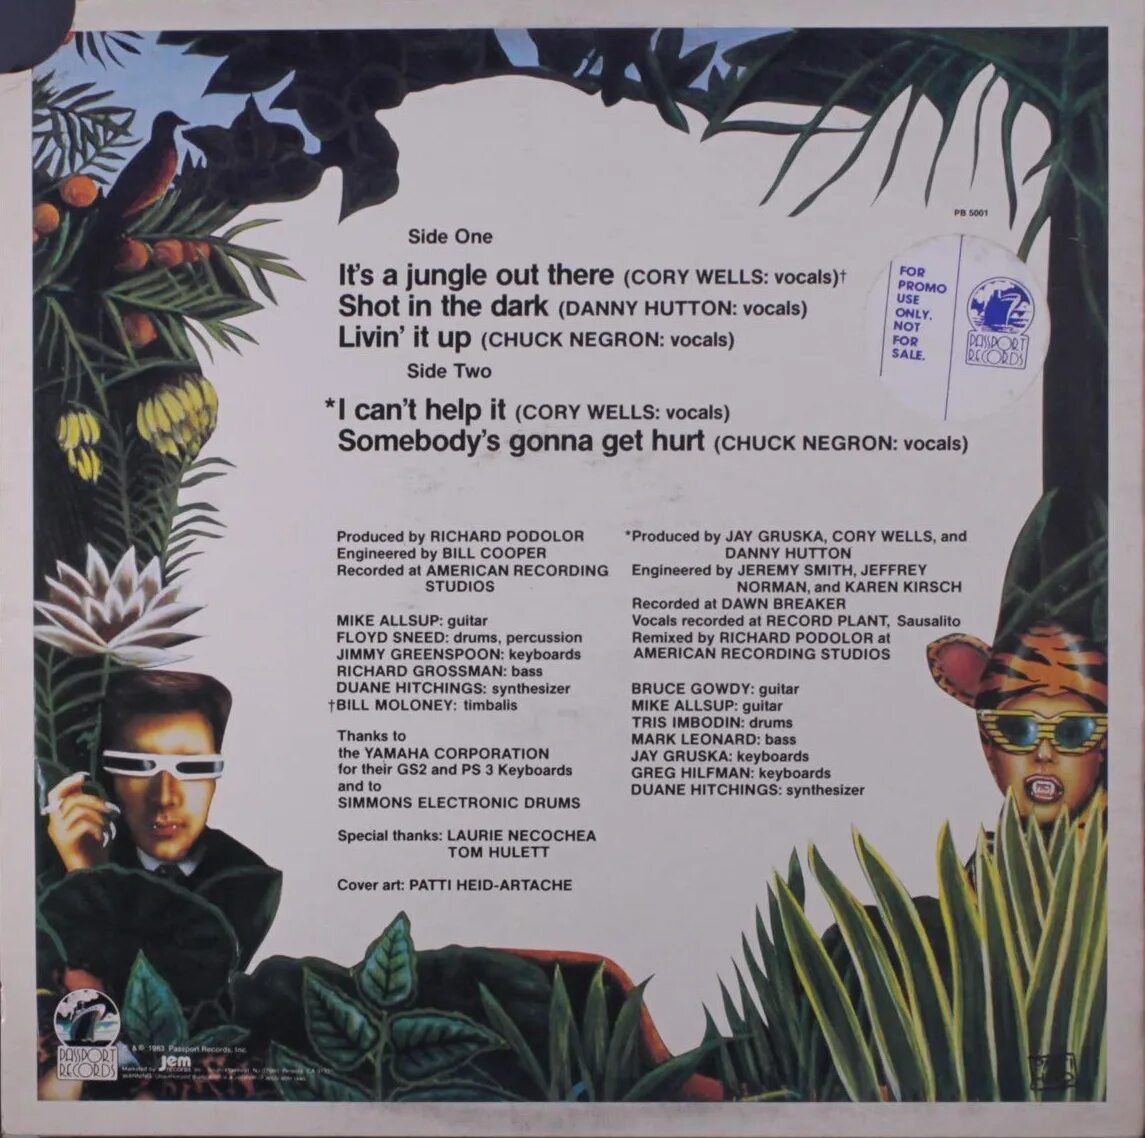 Jungle текст. It's a Jungle three Dog Night. King of the Jungle текст. Mastedon - 1989 - it's a Jungle out there. In the jungle текст